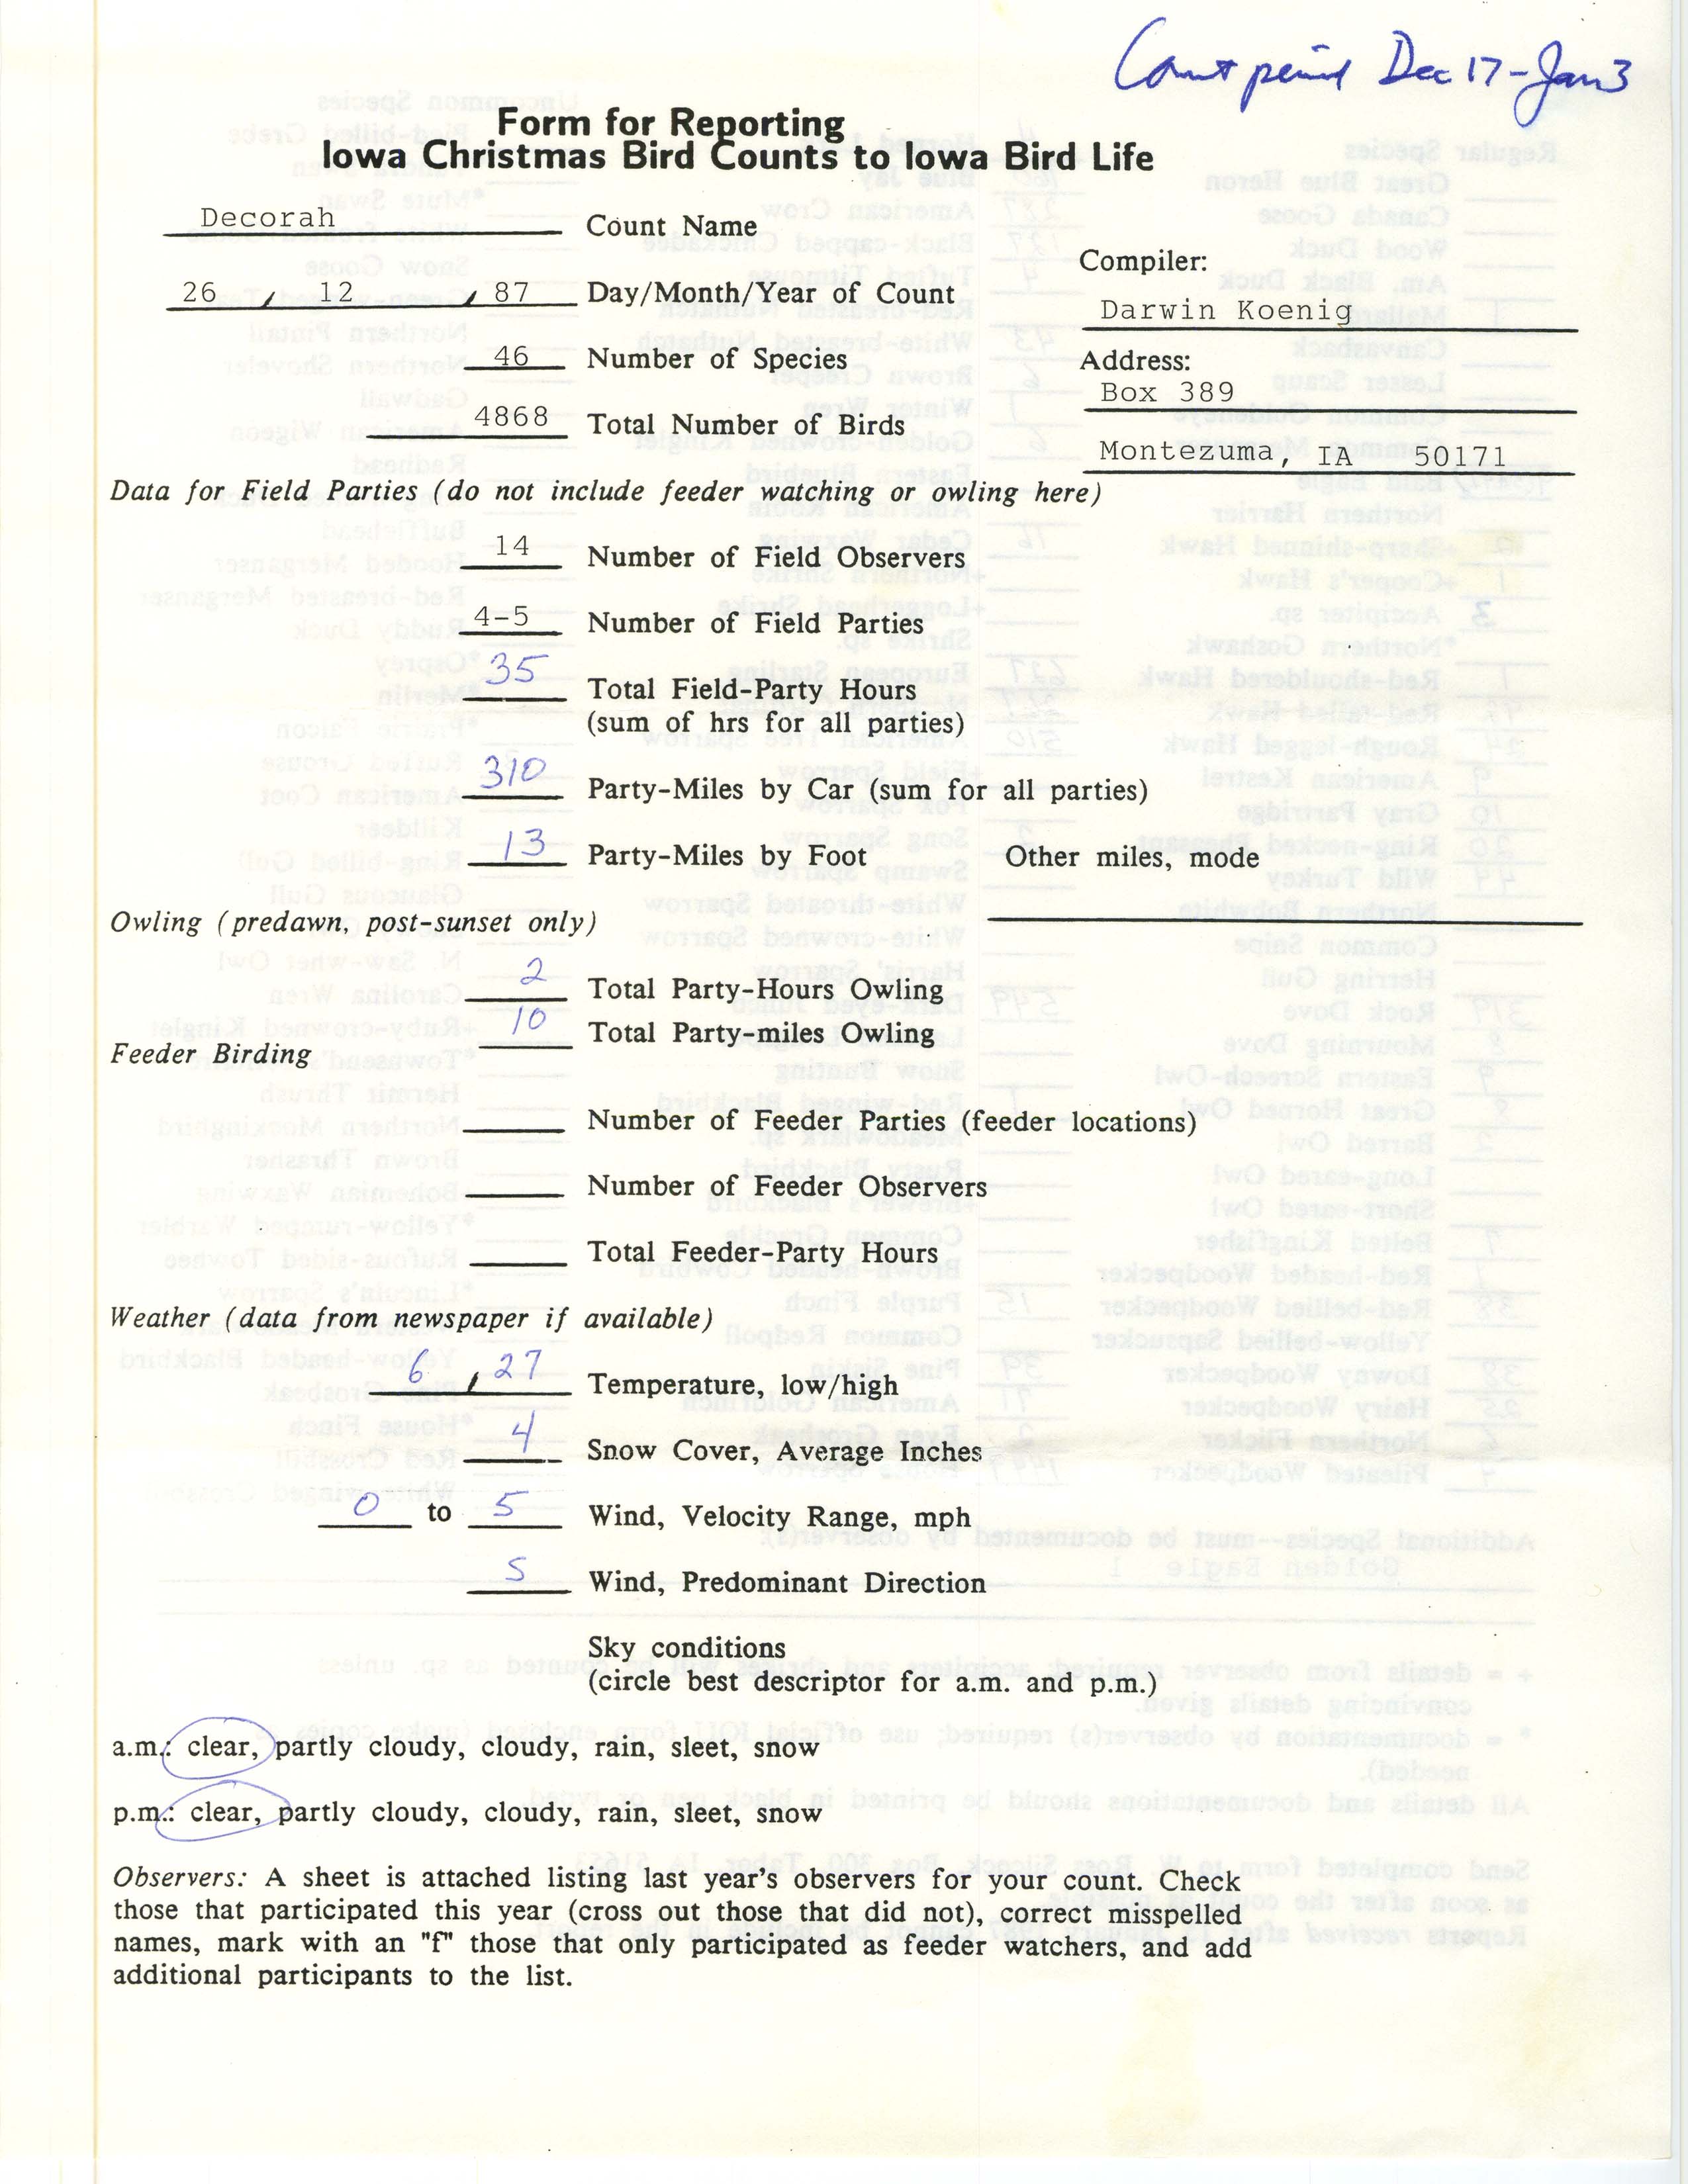 Form for reporting Iowa Christmas bird counts to Iowa Bird Life, Darwin Koenig, December 26, 1987